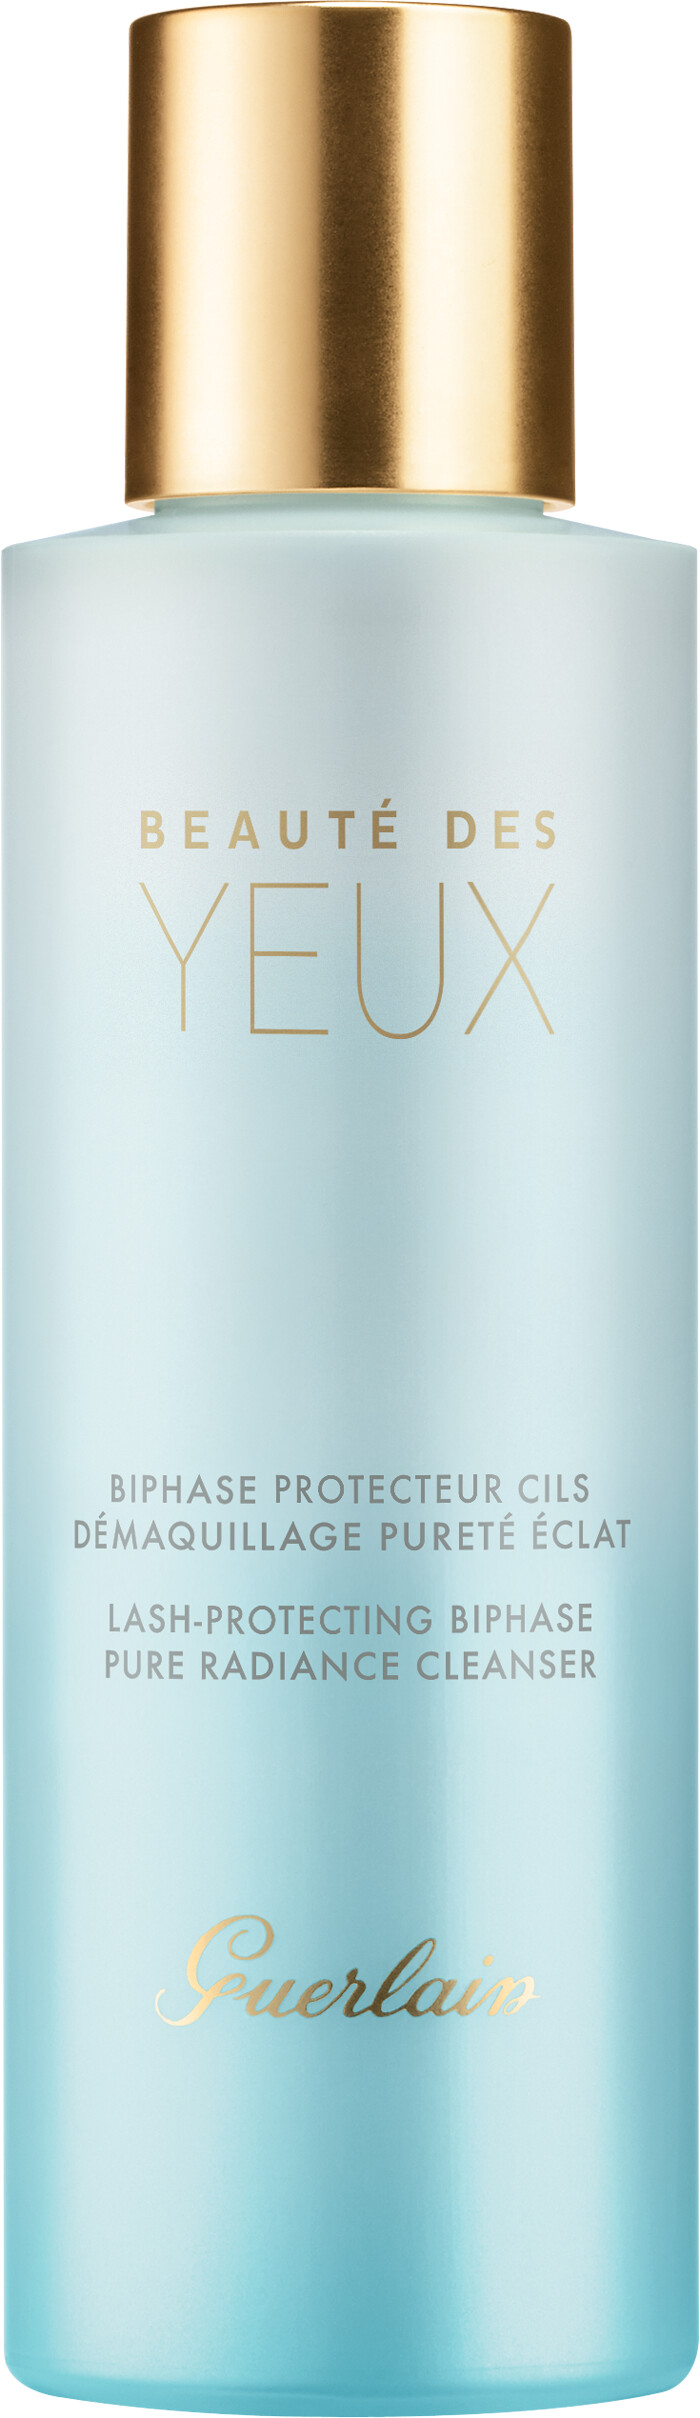 GUERLAIN Beaute des Yeux - Lash-Protecting Biphase - Pure Radiance Cleanser 125ml